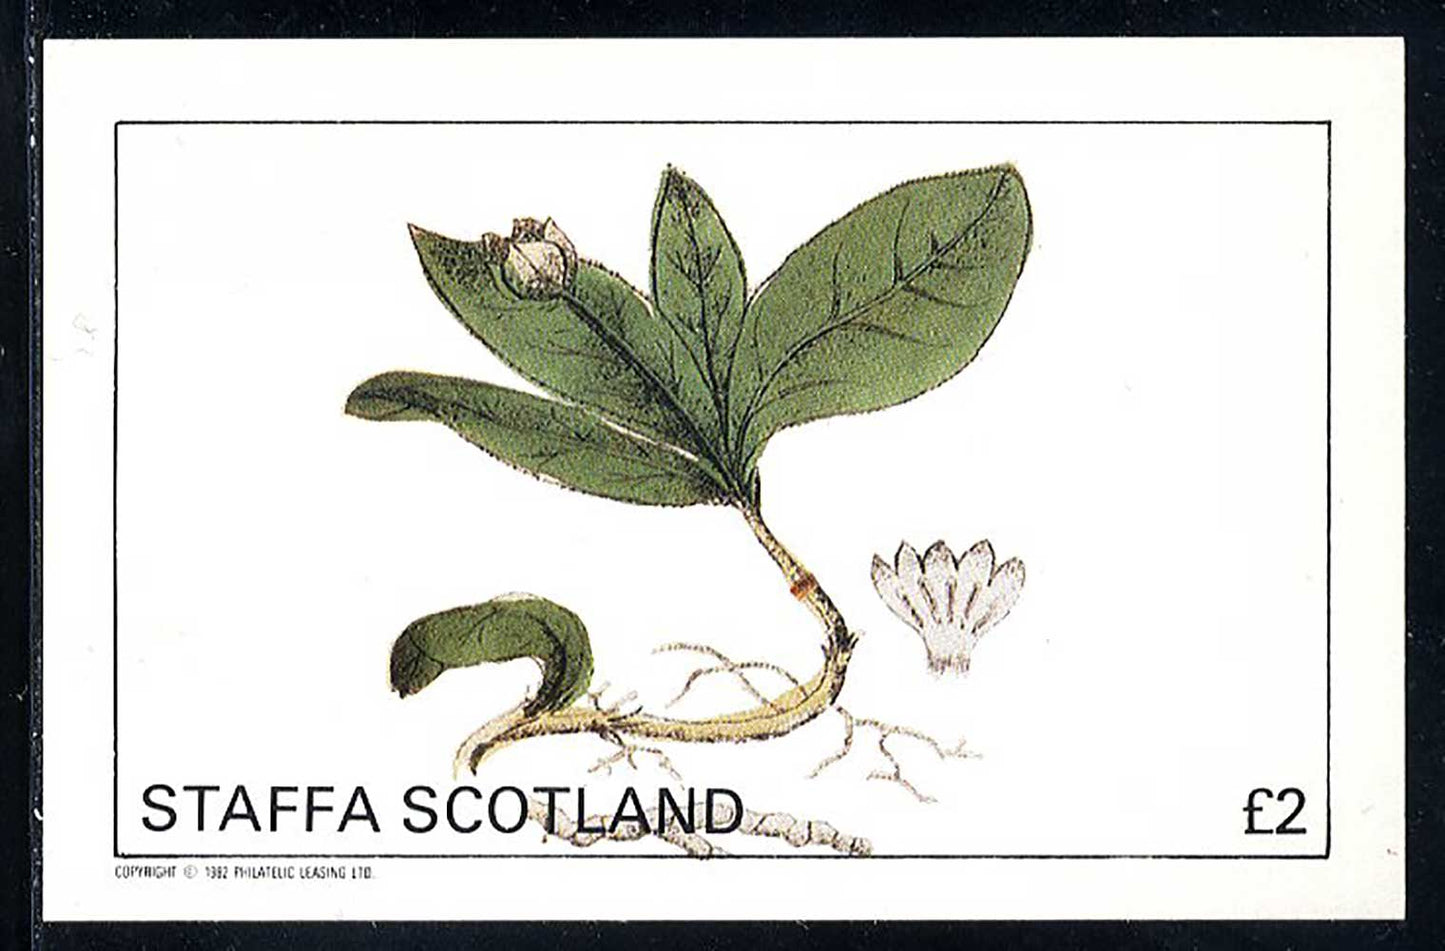 Staffa Botanical Prints £2